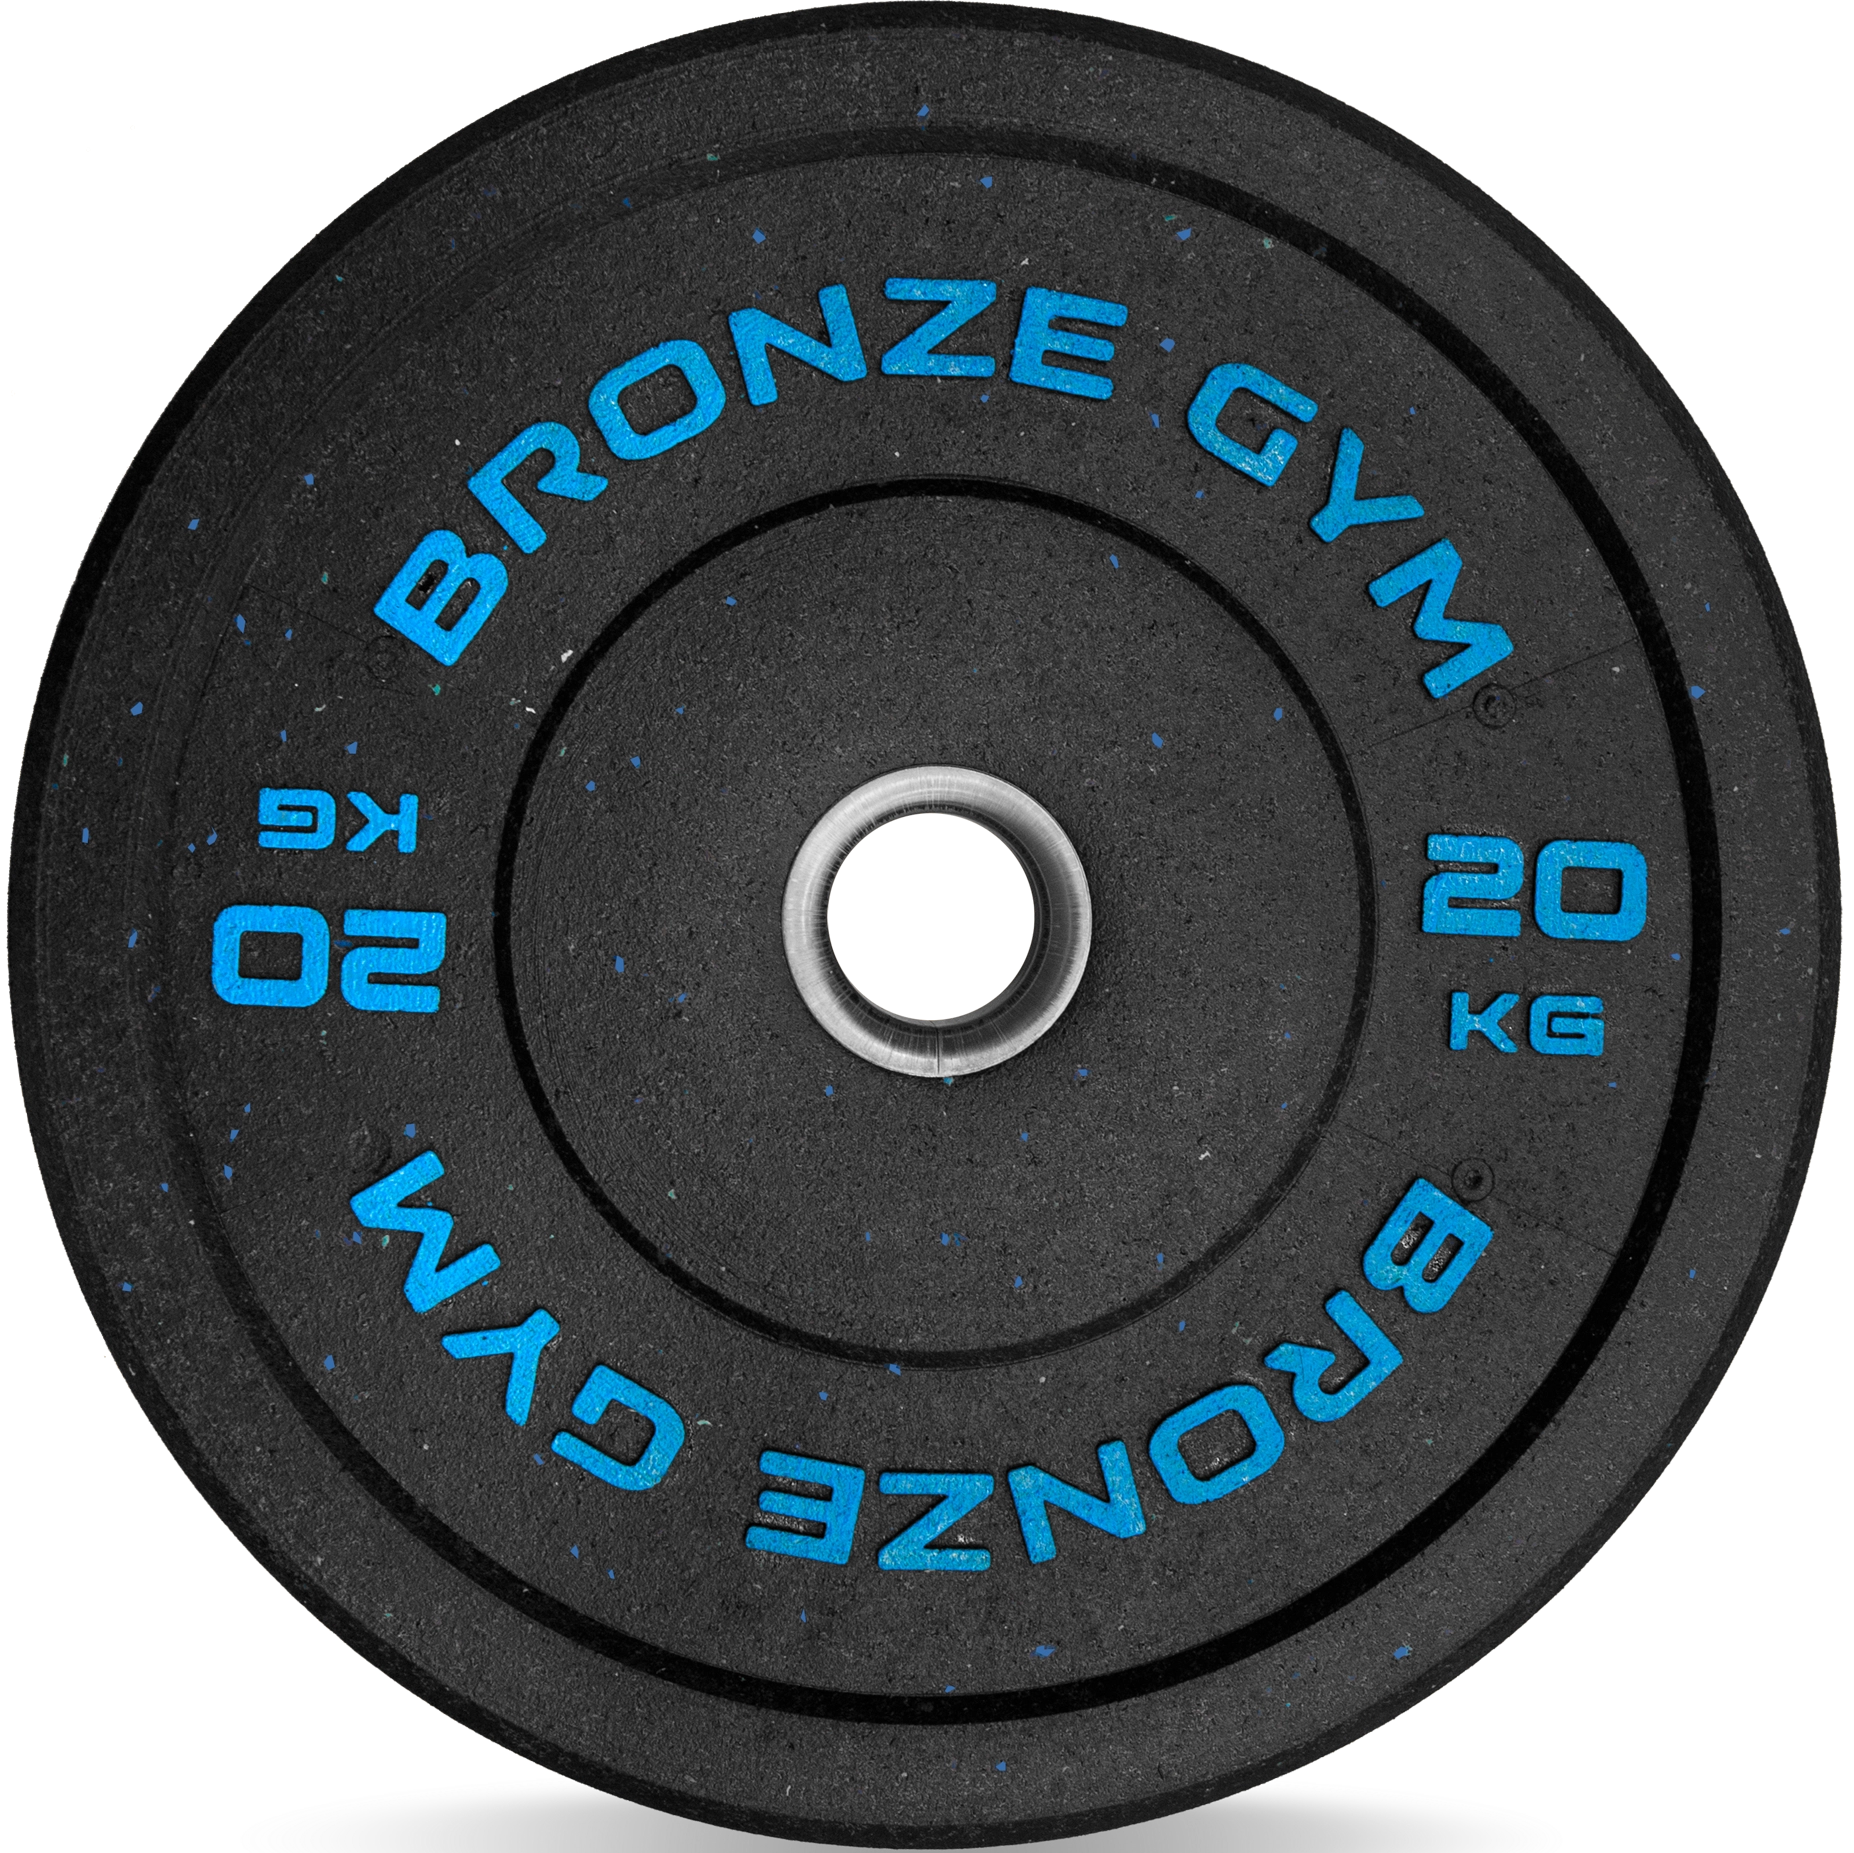 Bronze Gym Диск бамперный 20кг д50 с гарантией